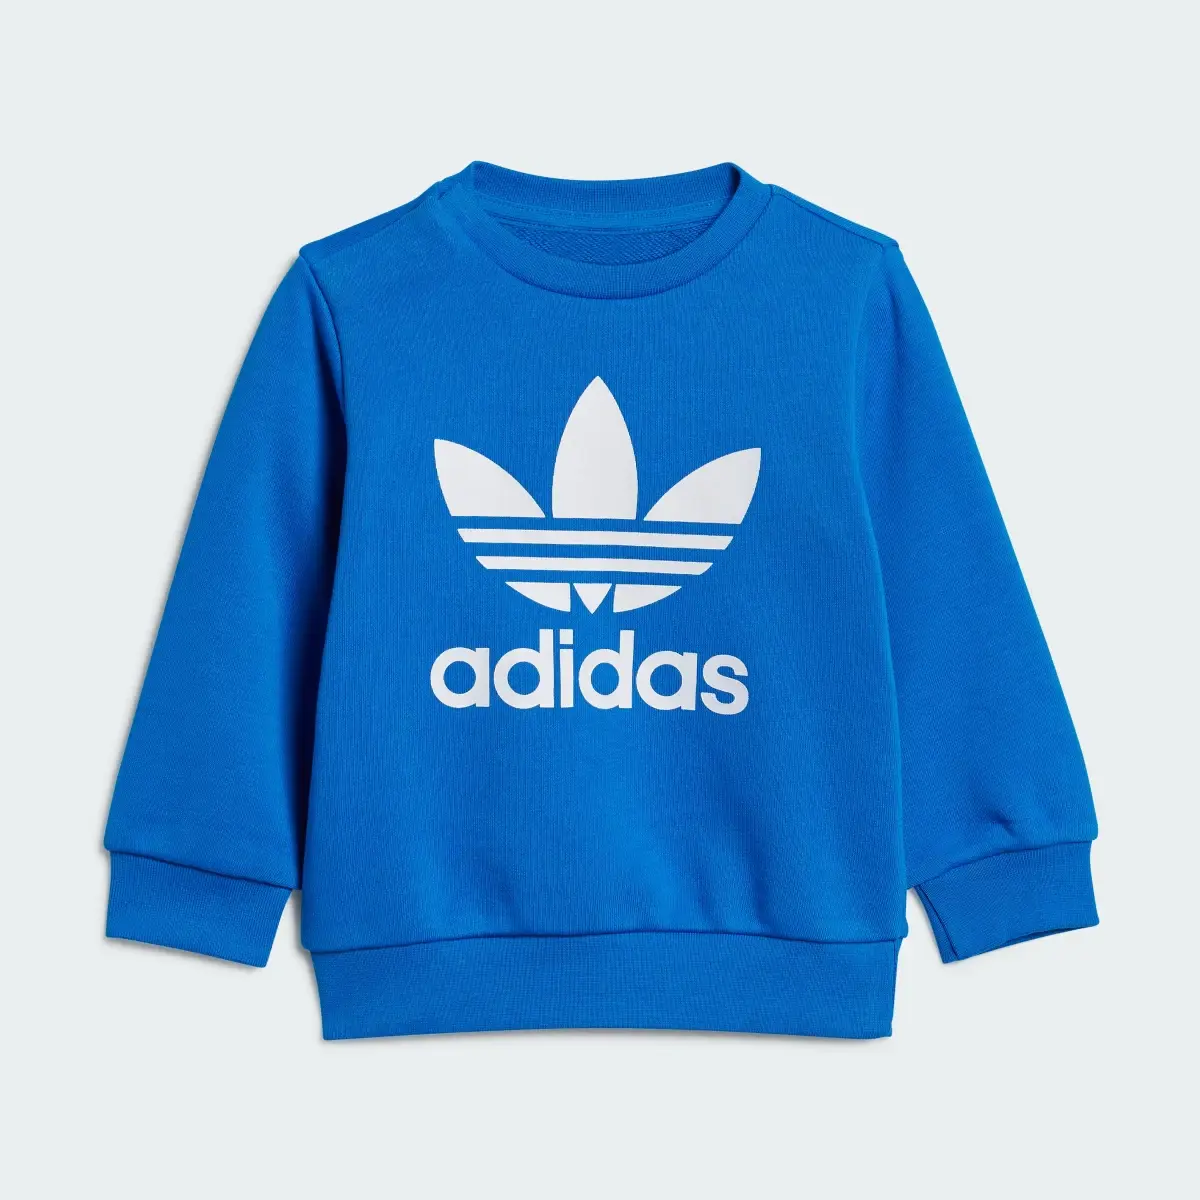 Adidas Tuta Crew Sweatshirt. 3